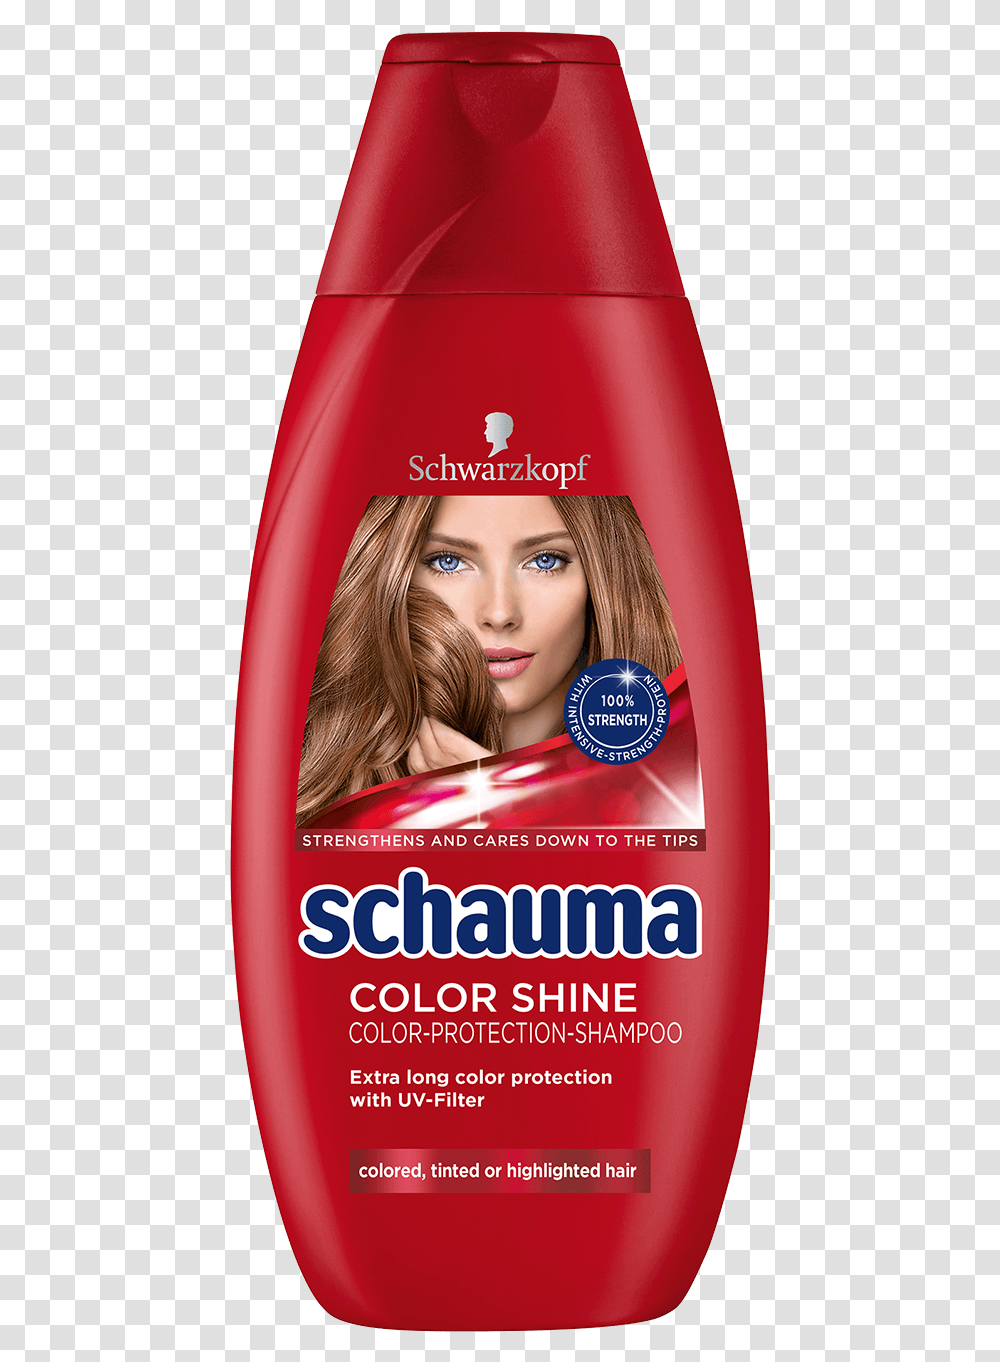 Schauma Color Shine Download Schauma Color Shine, Bottle, Person, Human, Shampoo Transparent Png